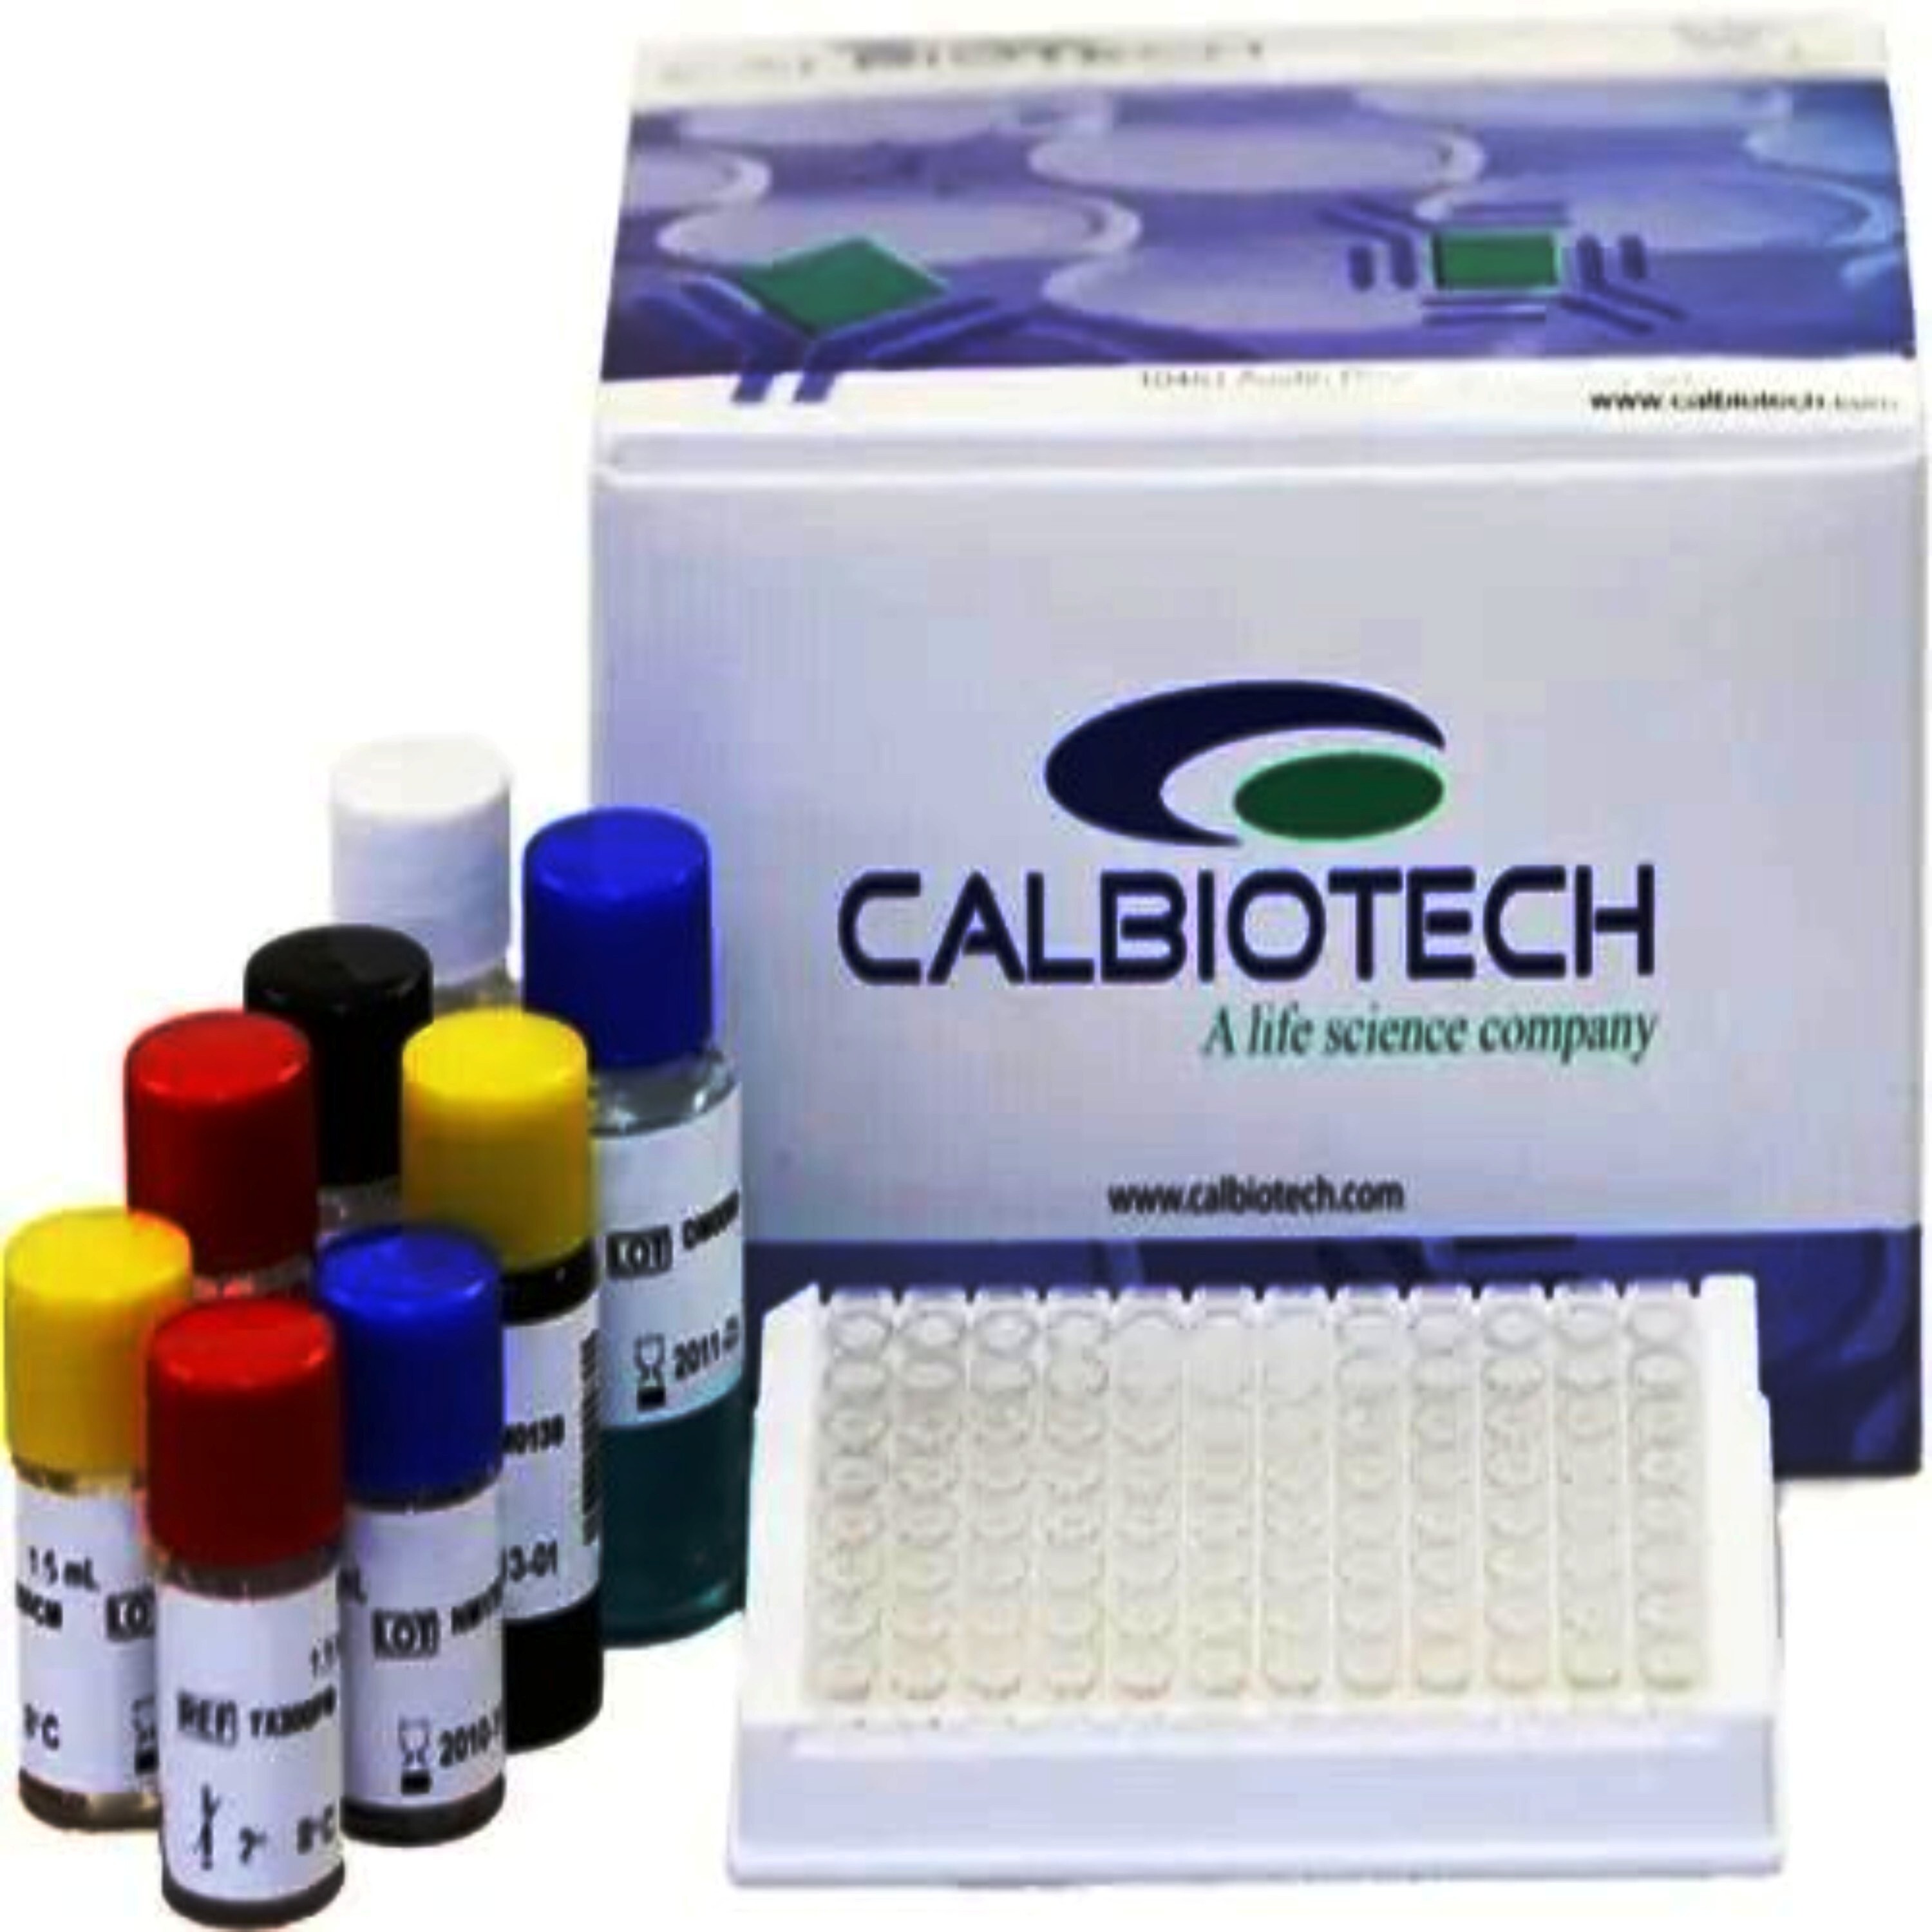 Calbiotech Chlamydia Trachomatis IgG Elisa Kit